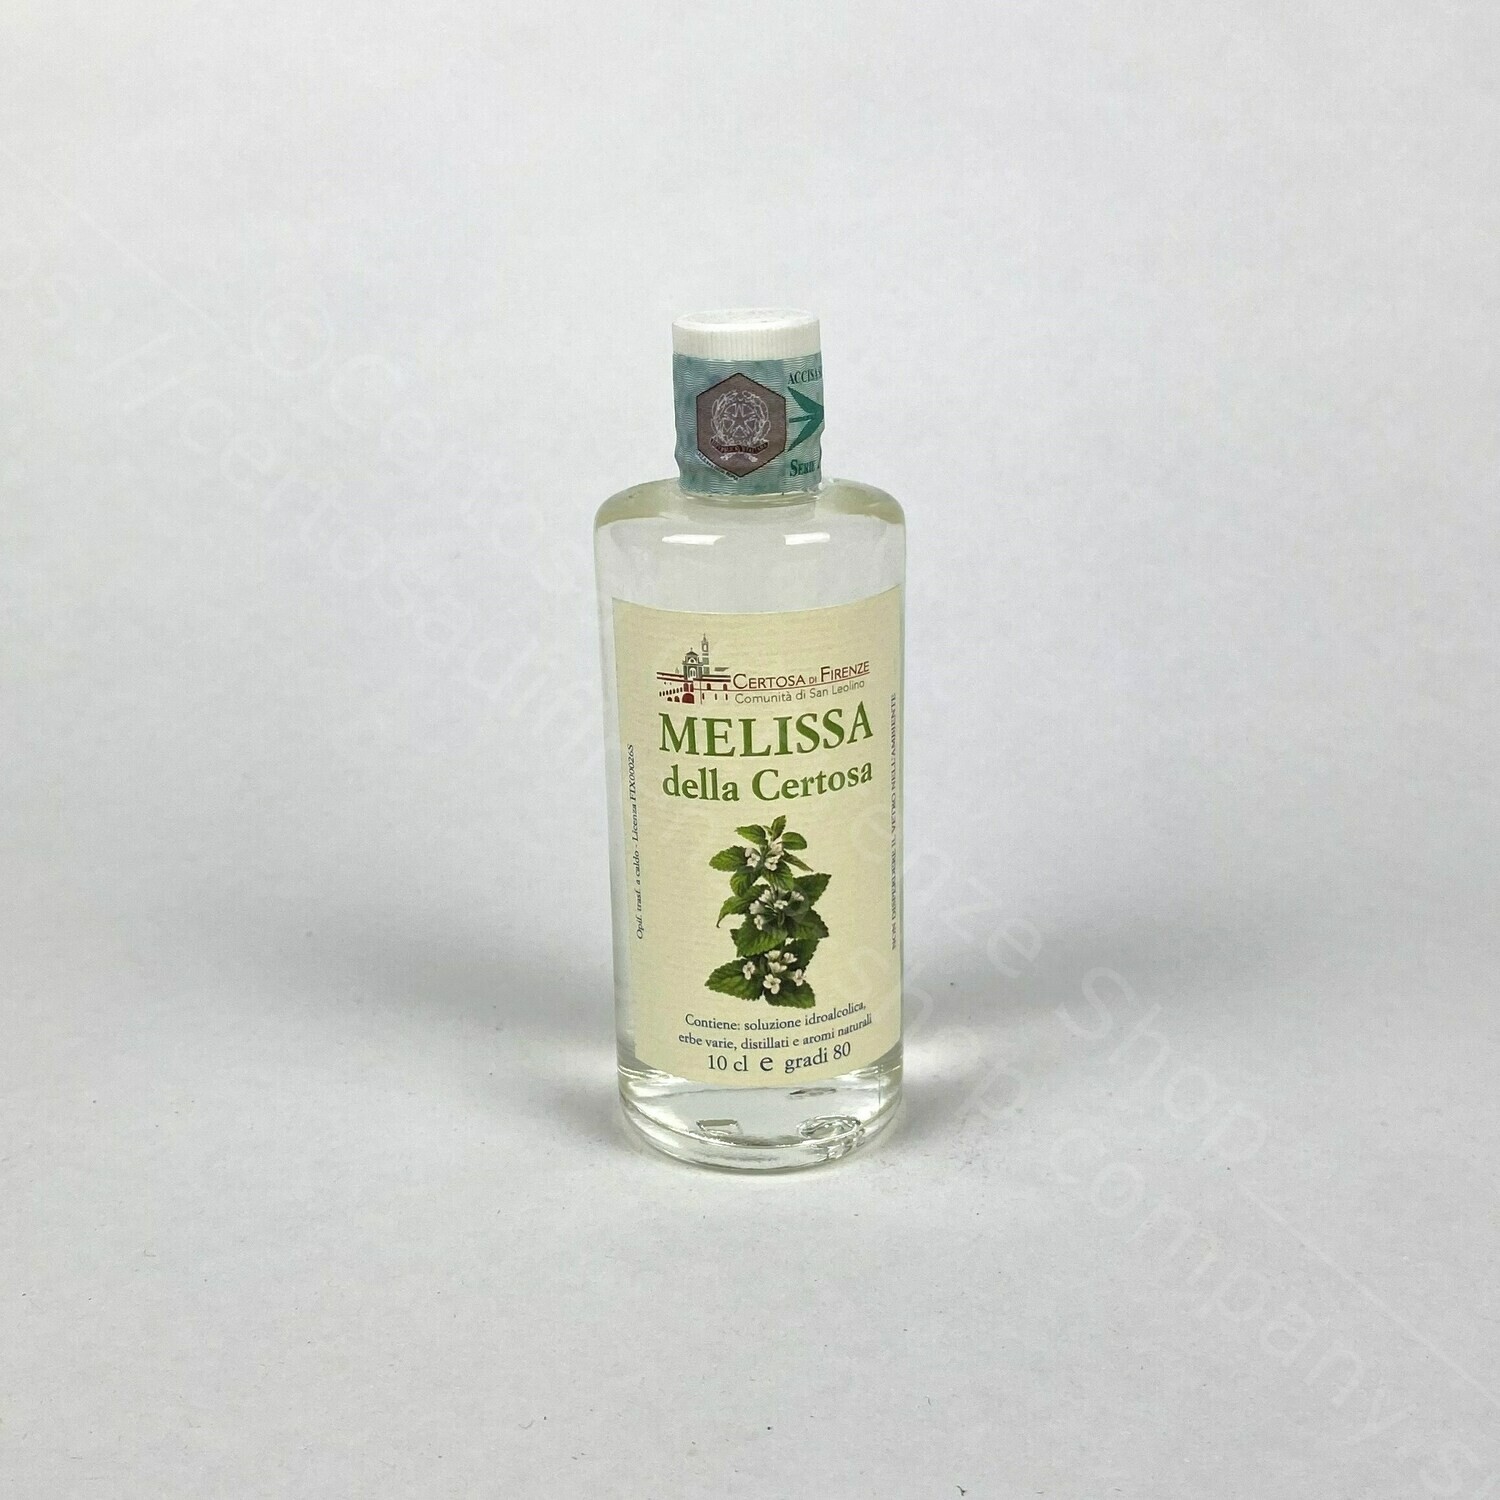 Melissa - Acqua antisterica